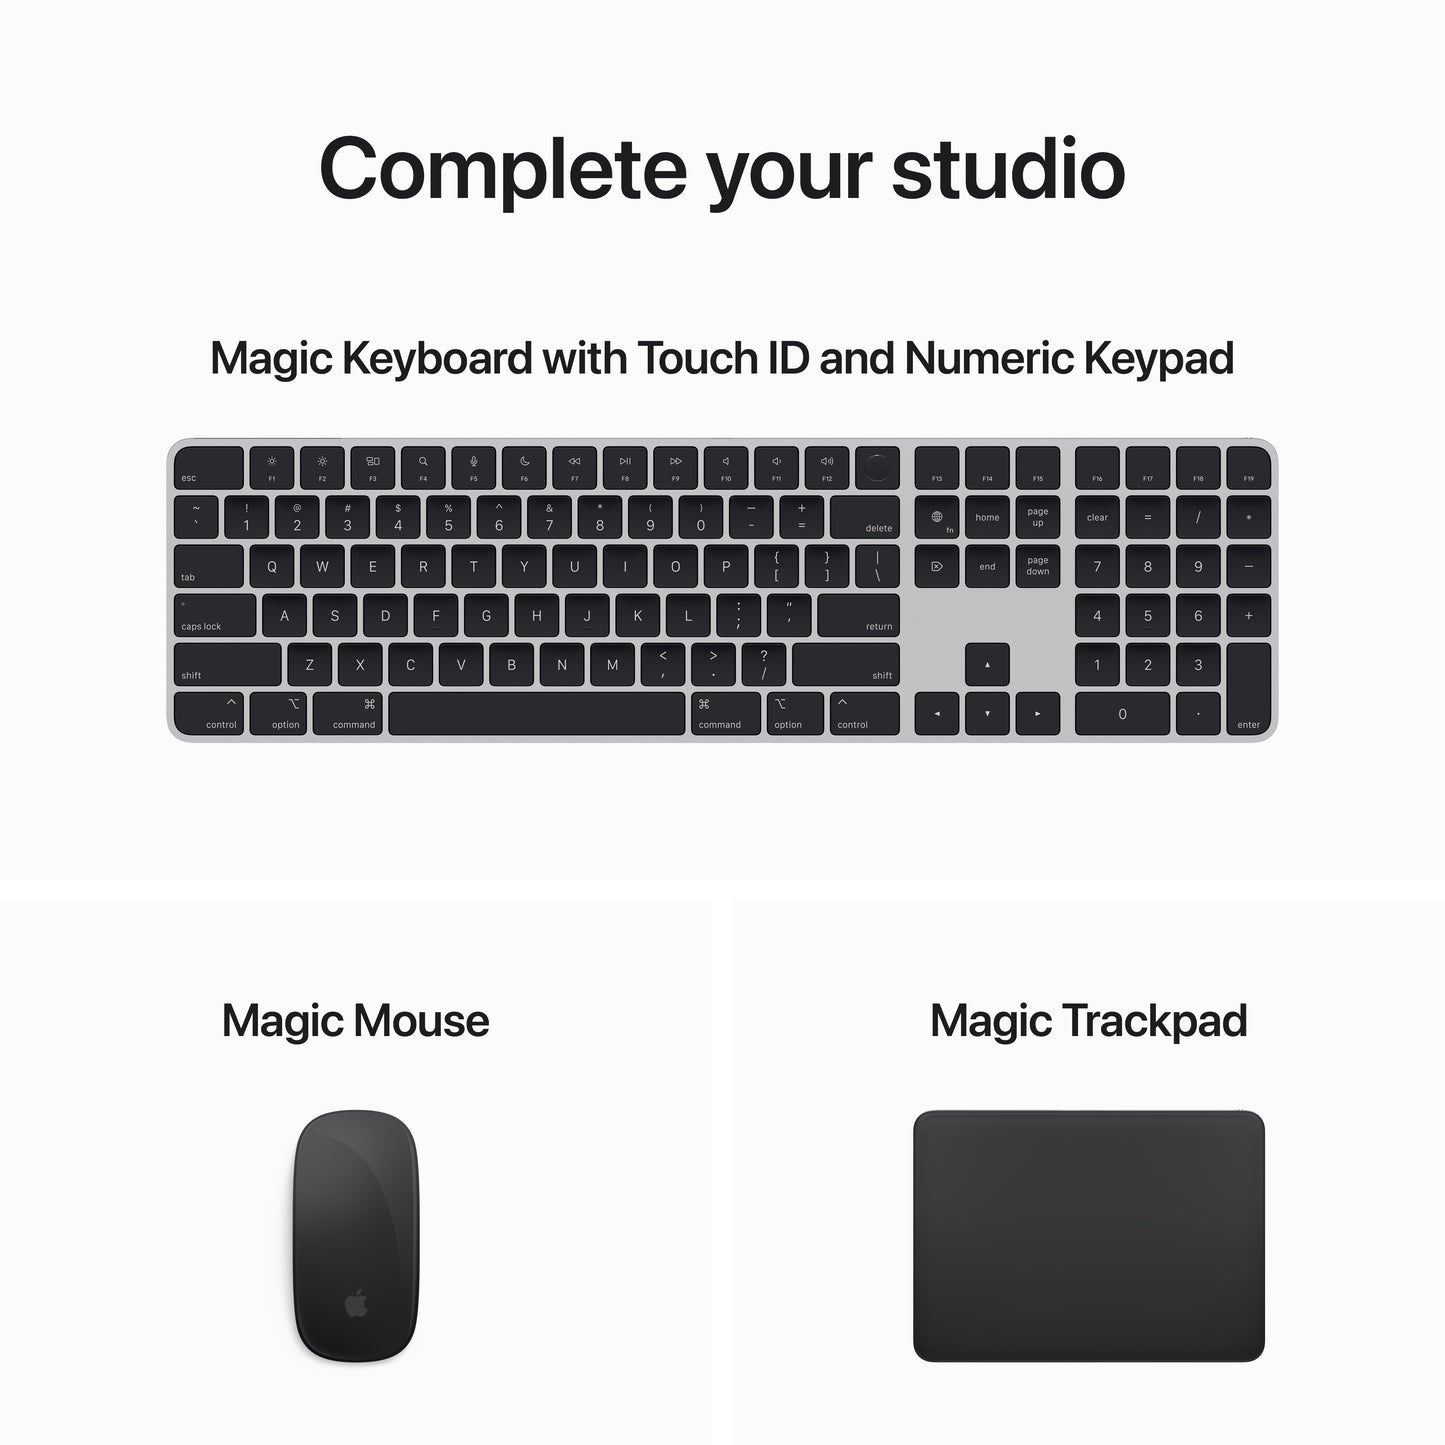 Mac Studio with M2